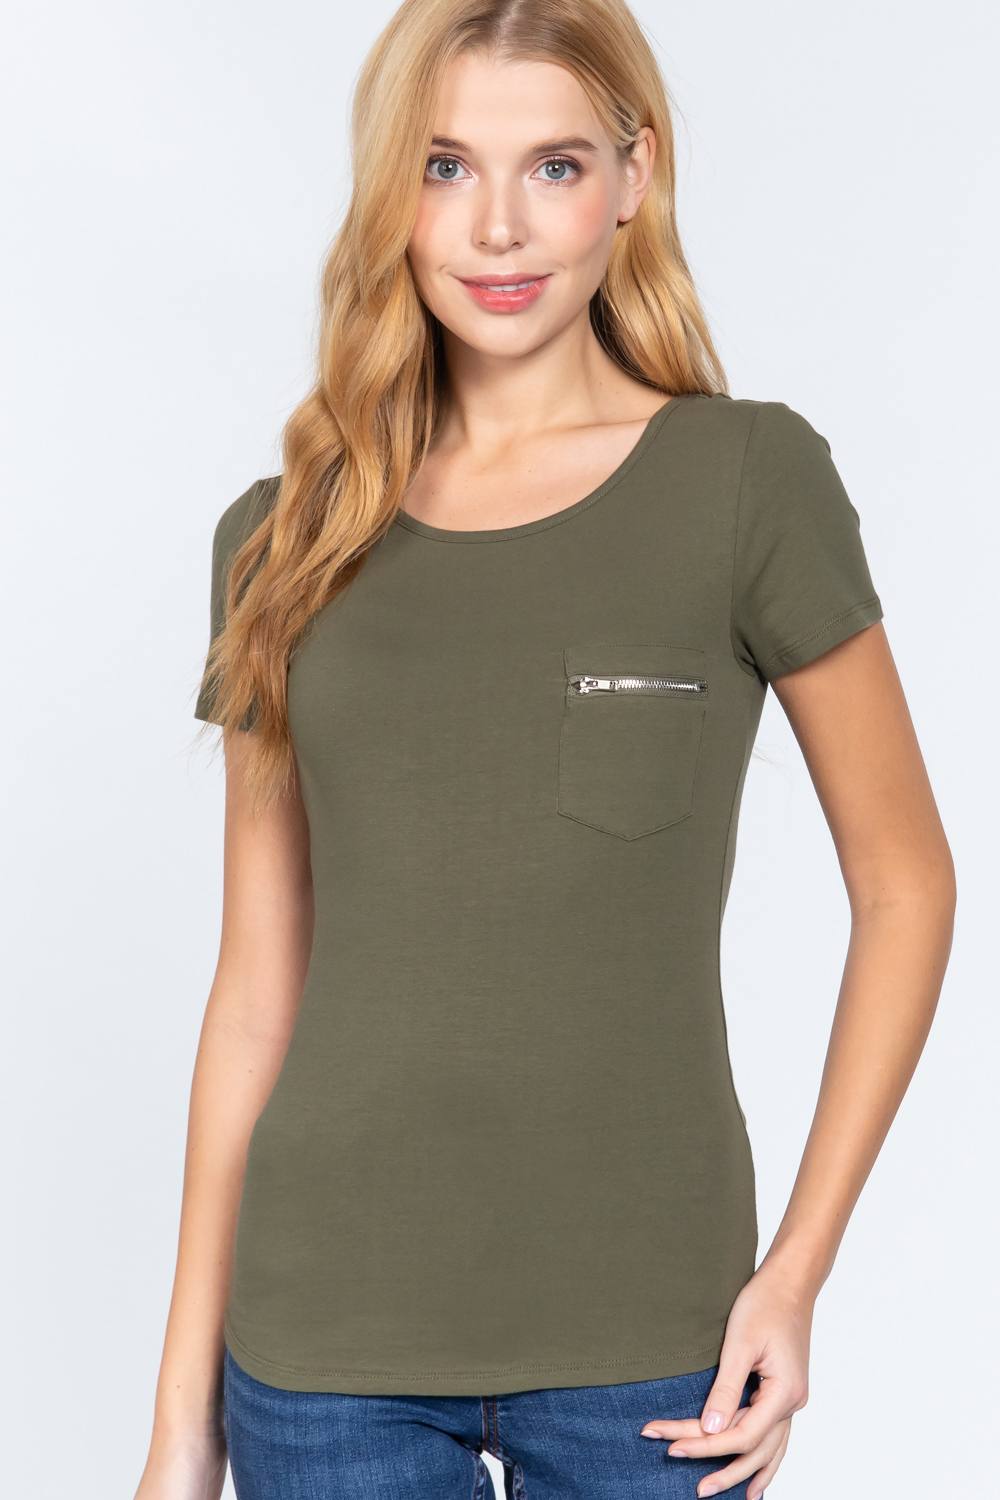 Olive Green Short Sleeve Top Zipper Small Pocket Shirt